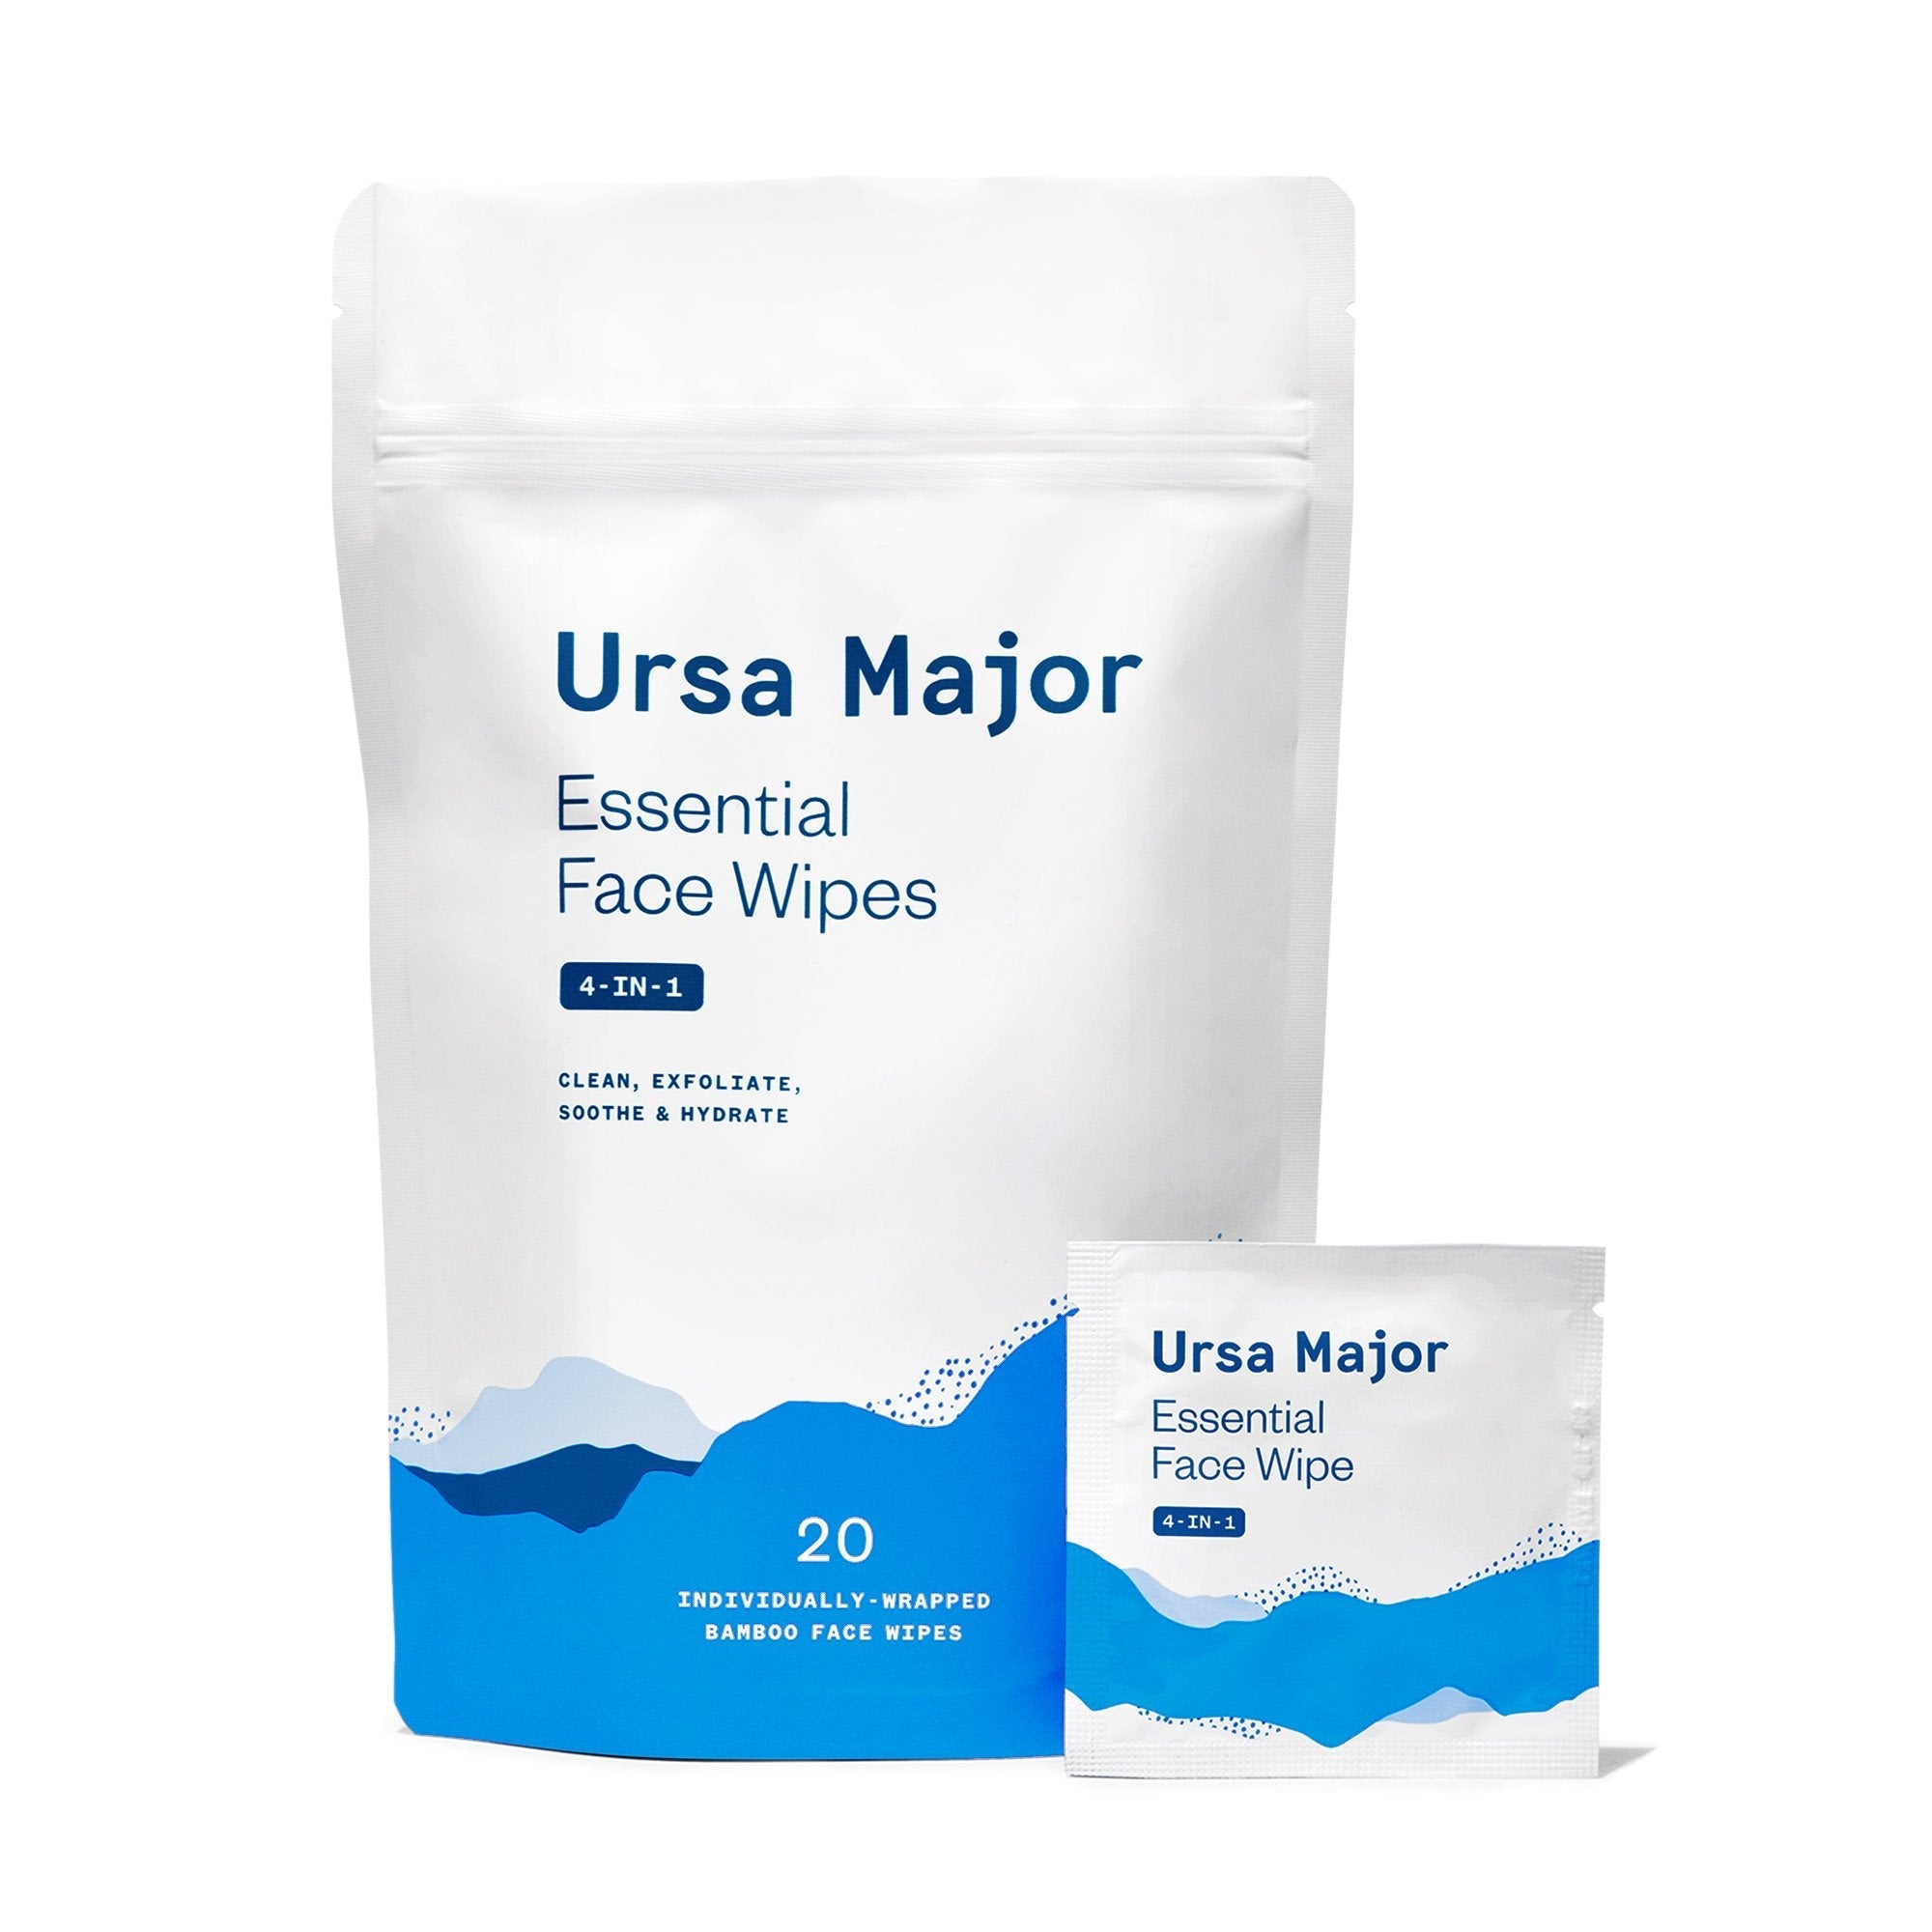 Ursa Major Essential Face Wipes 20 Count